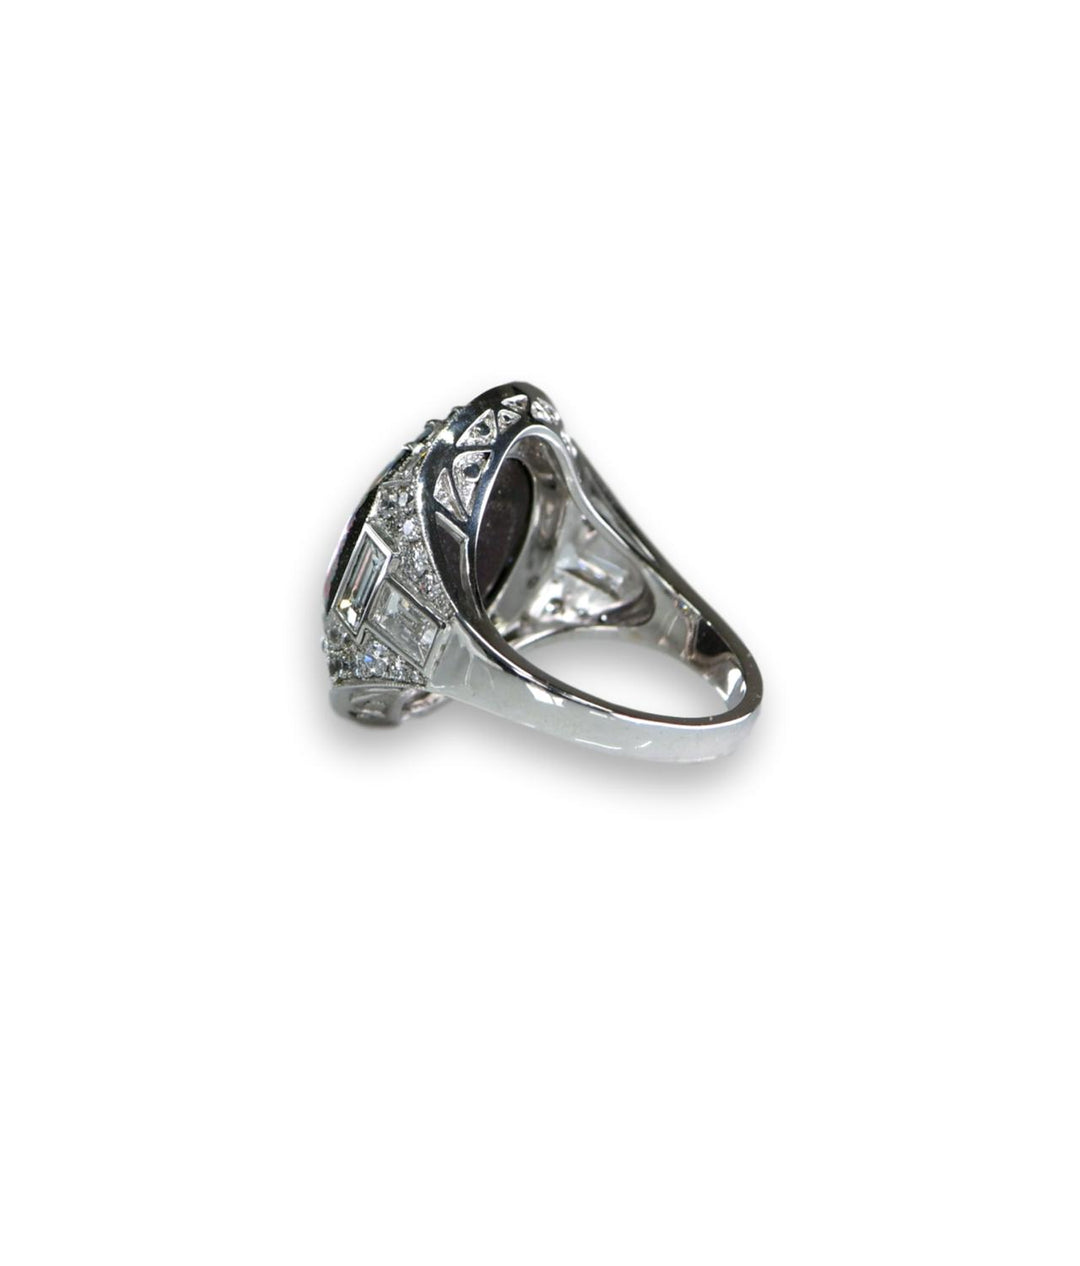 Rare Austrian Black Opal and Diamond Ring - SOLD